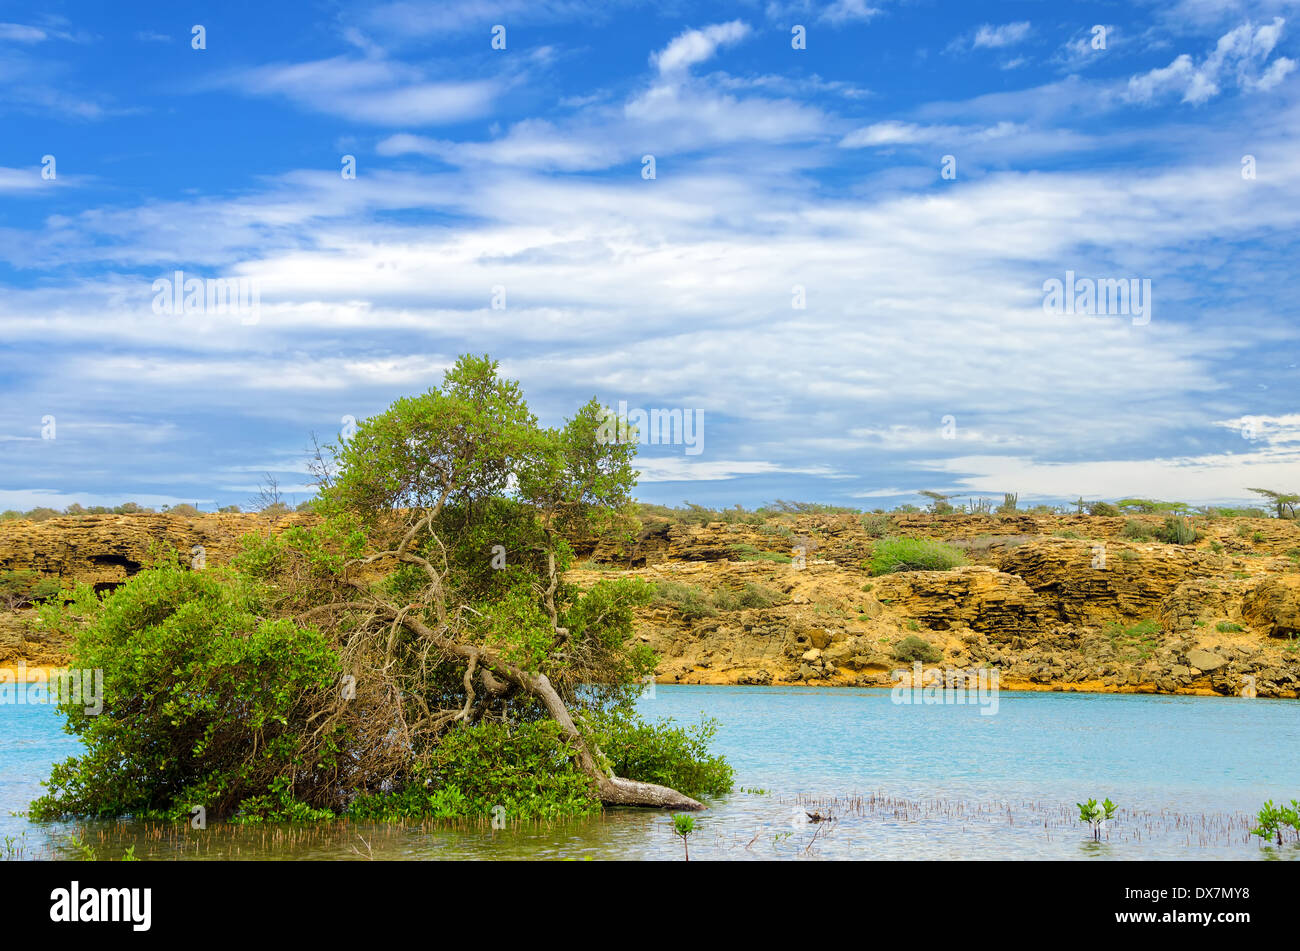 View of mangrove tree just off the coast of La Guajira, Colombia Stock Photo